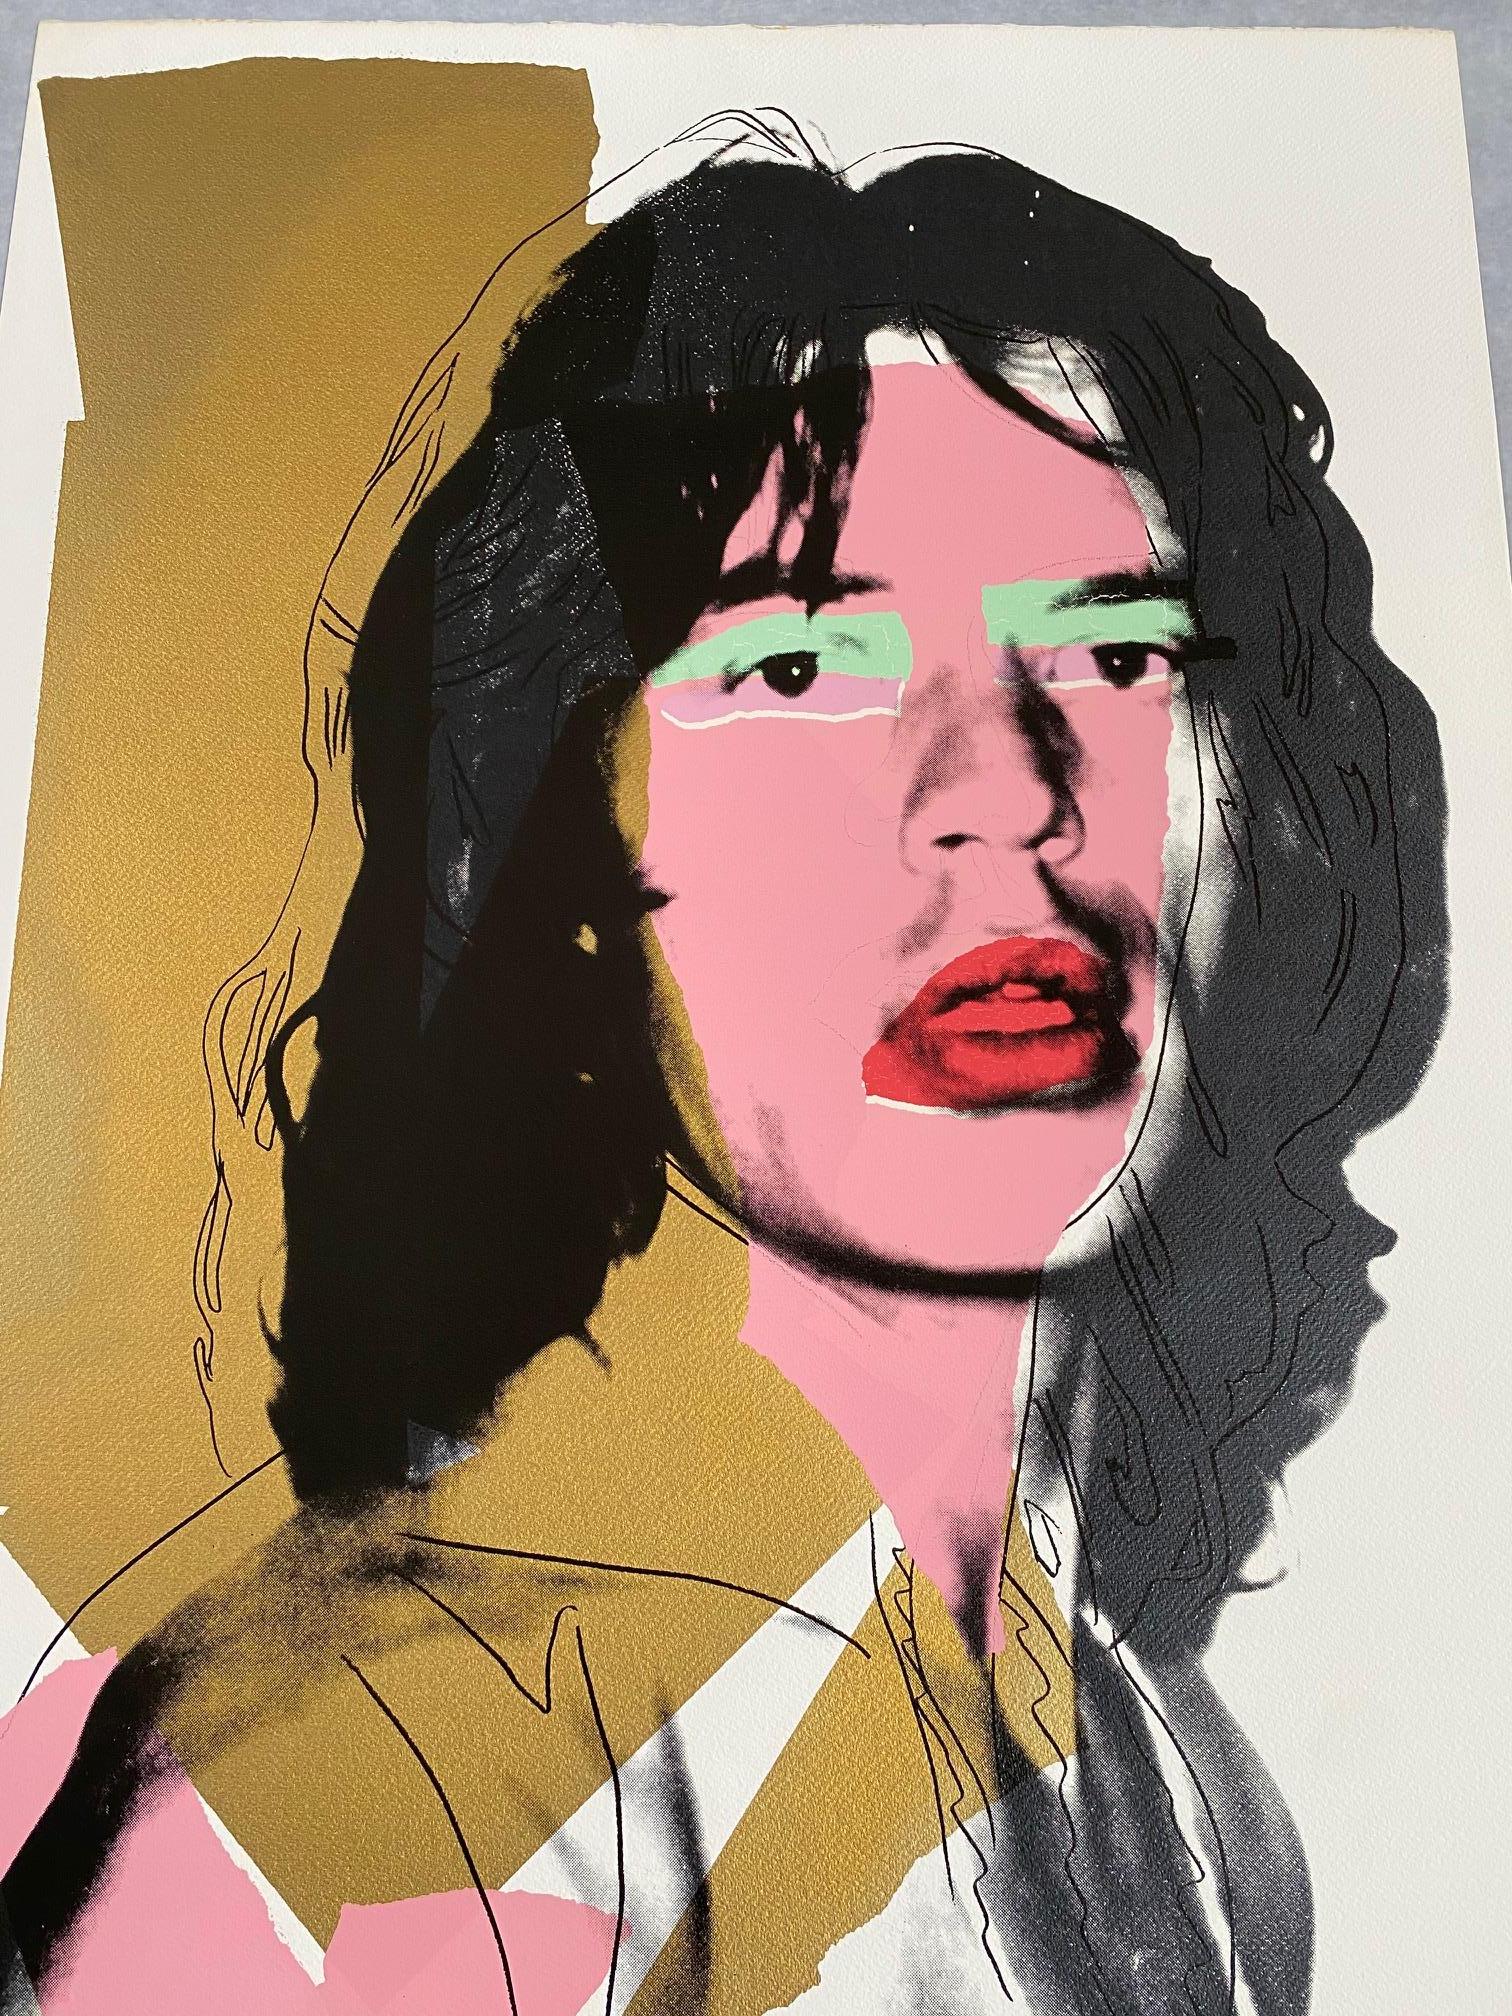 Mick Jagger F&S II.143 - Print by Andy Warhol